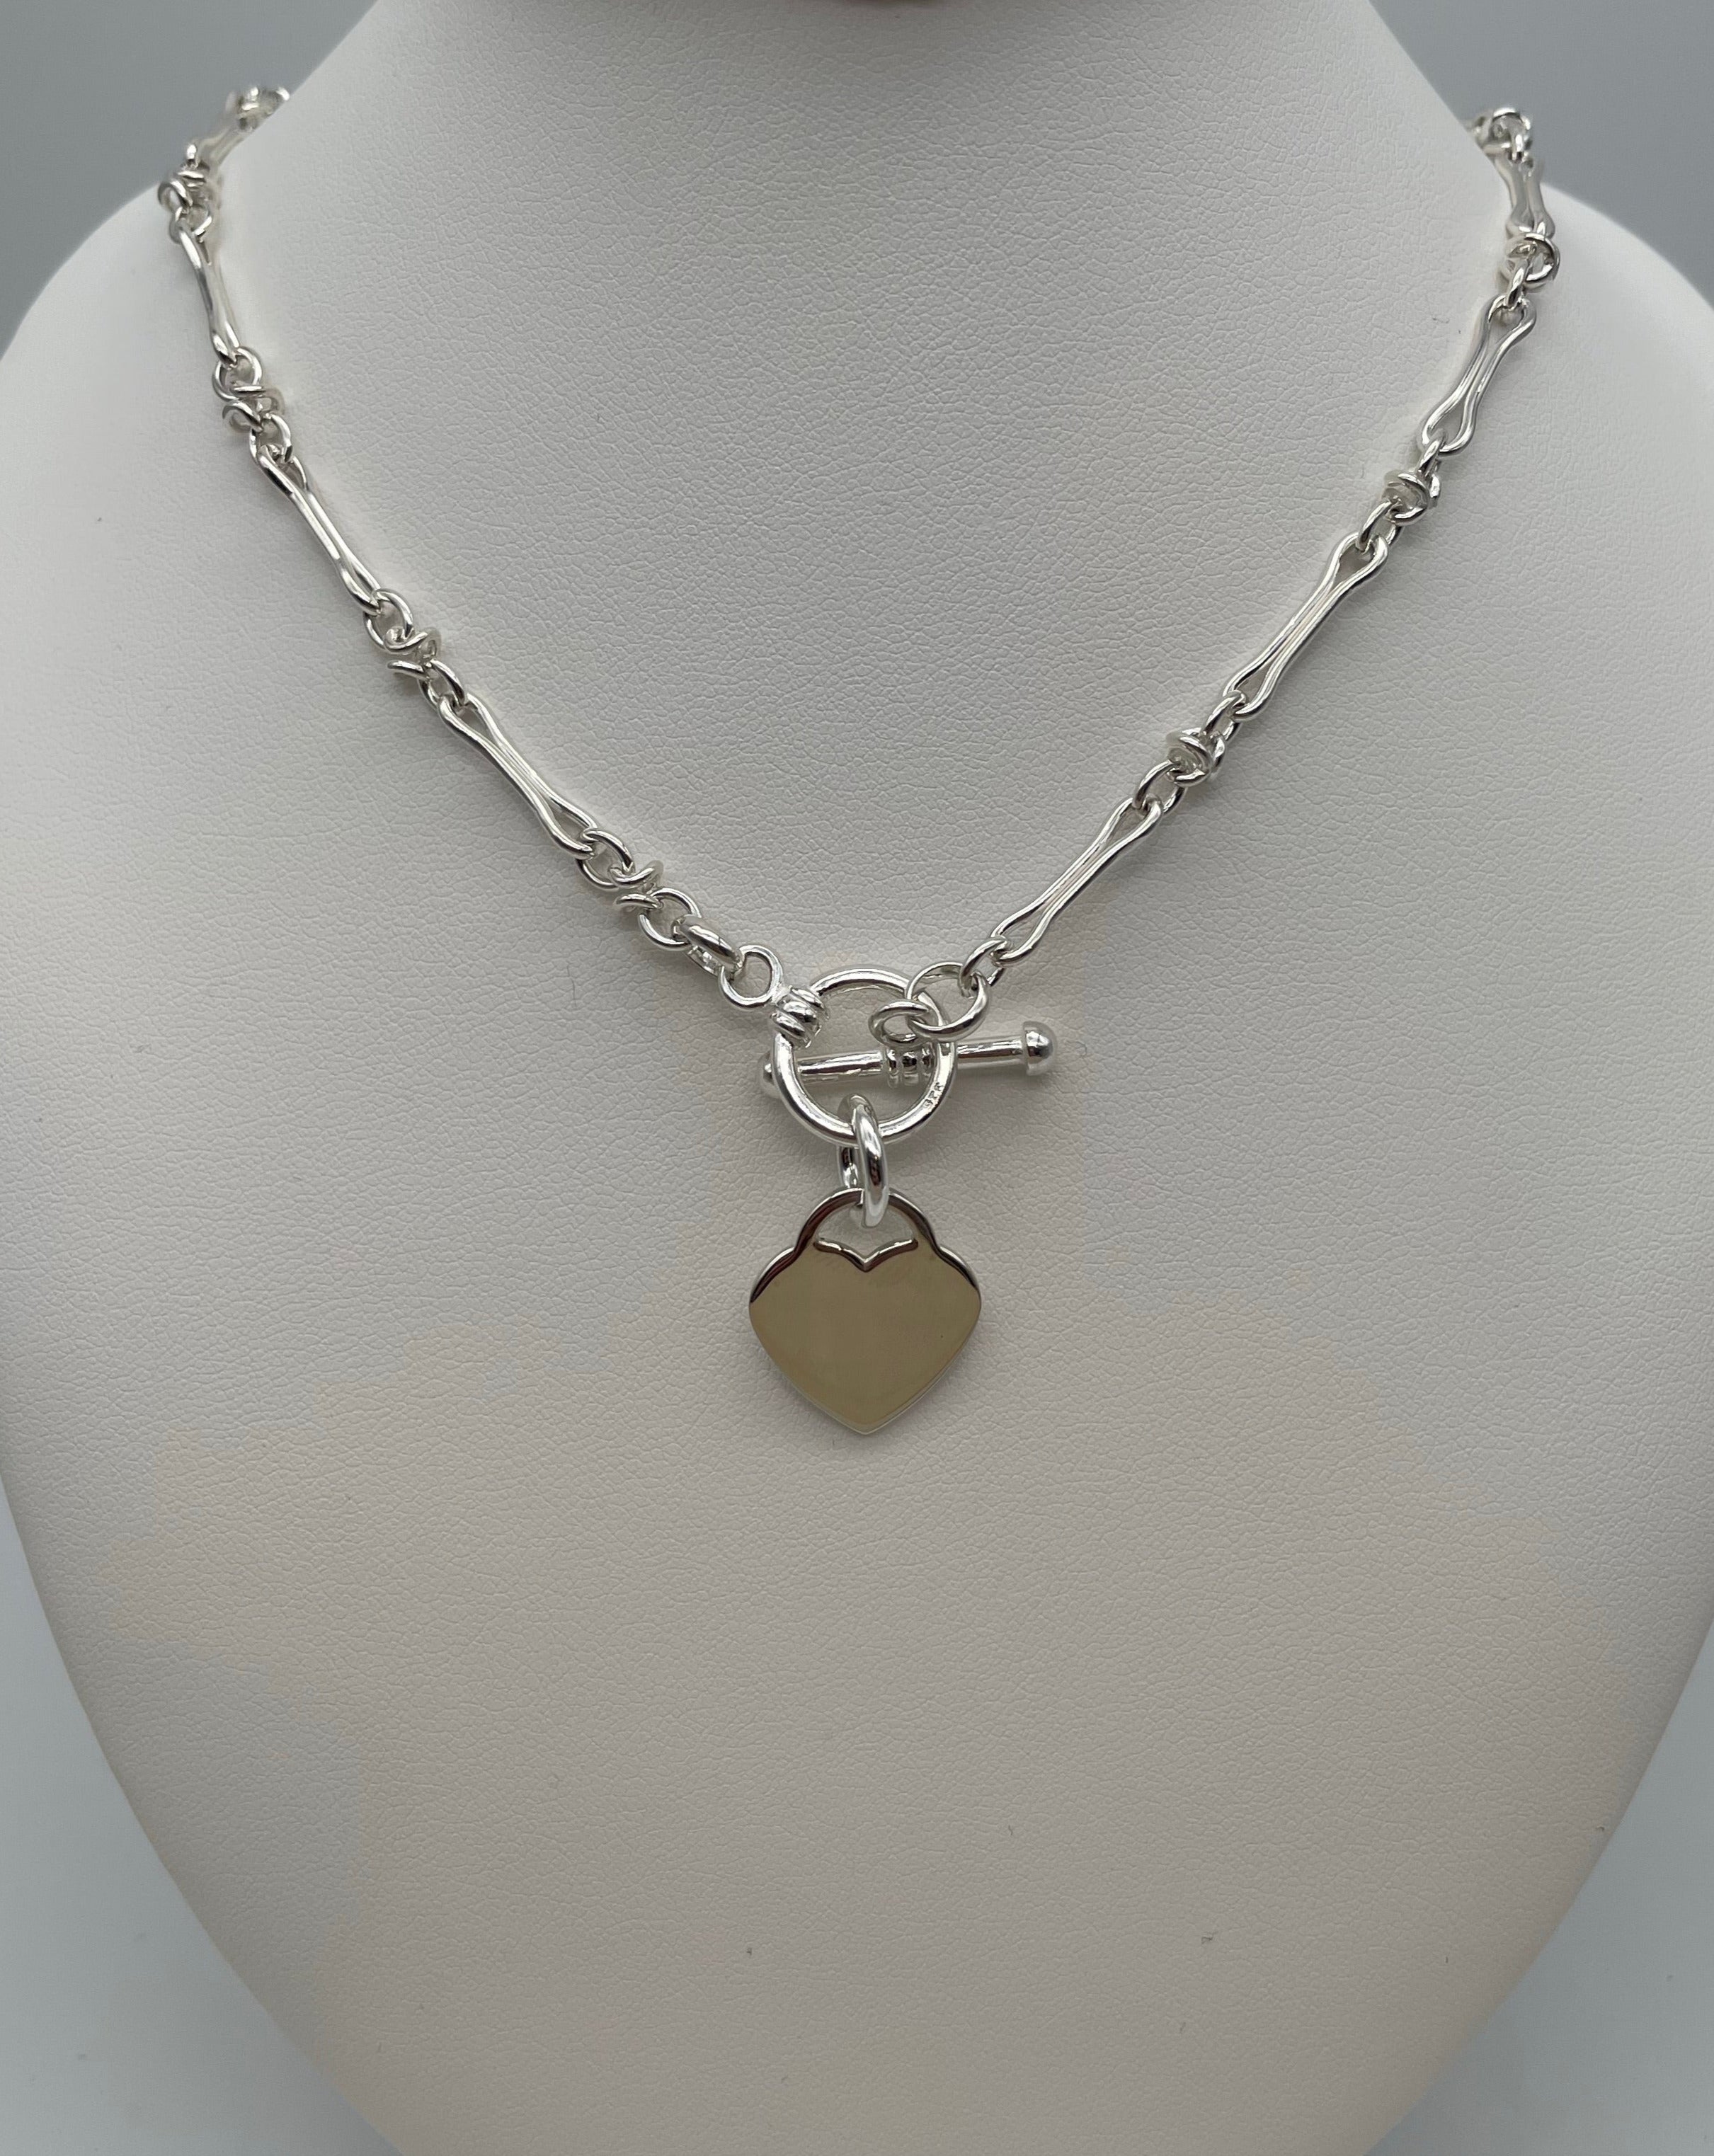 Tiffany & Co. 1837 Triple Bar Elements Necklace Pendant Sterling Silver  SV925 | eBay